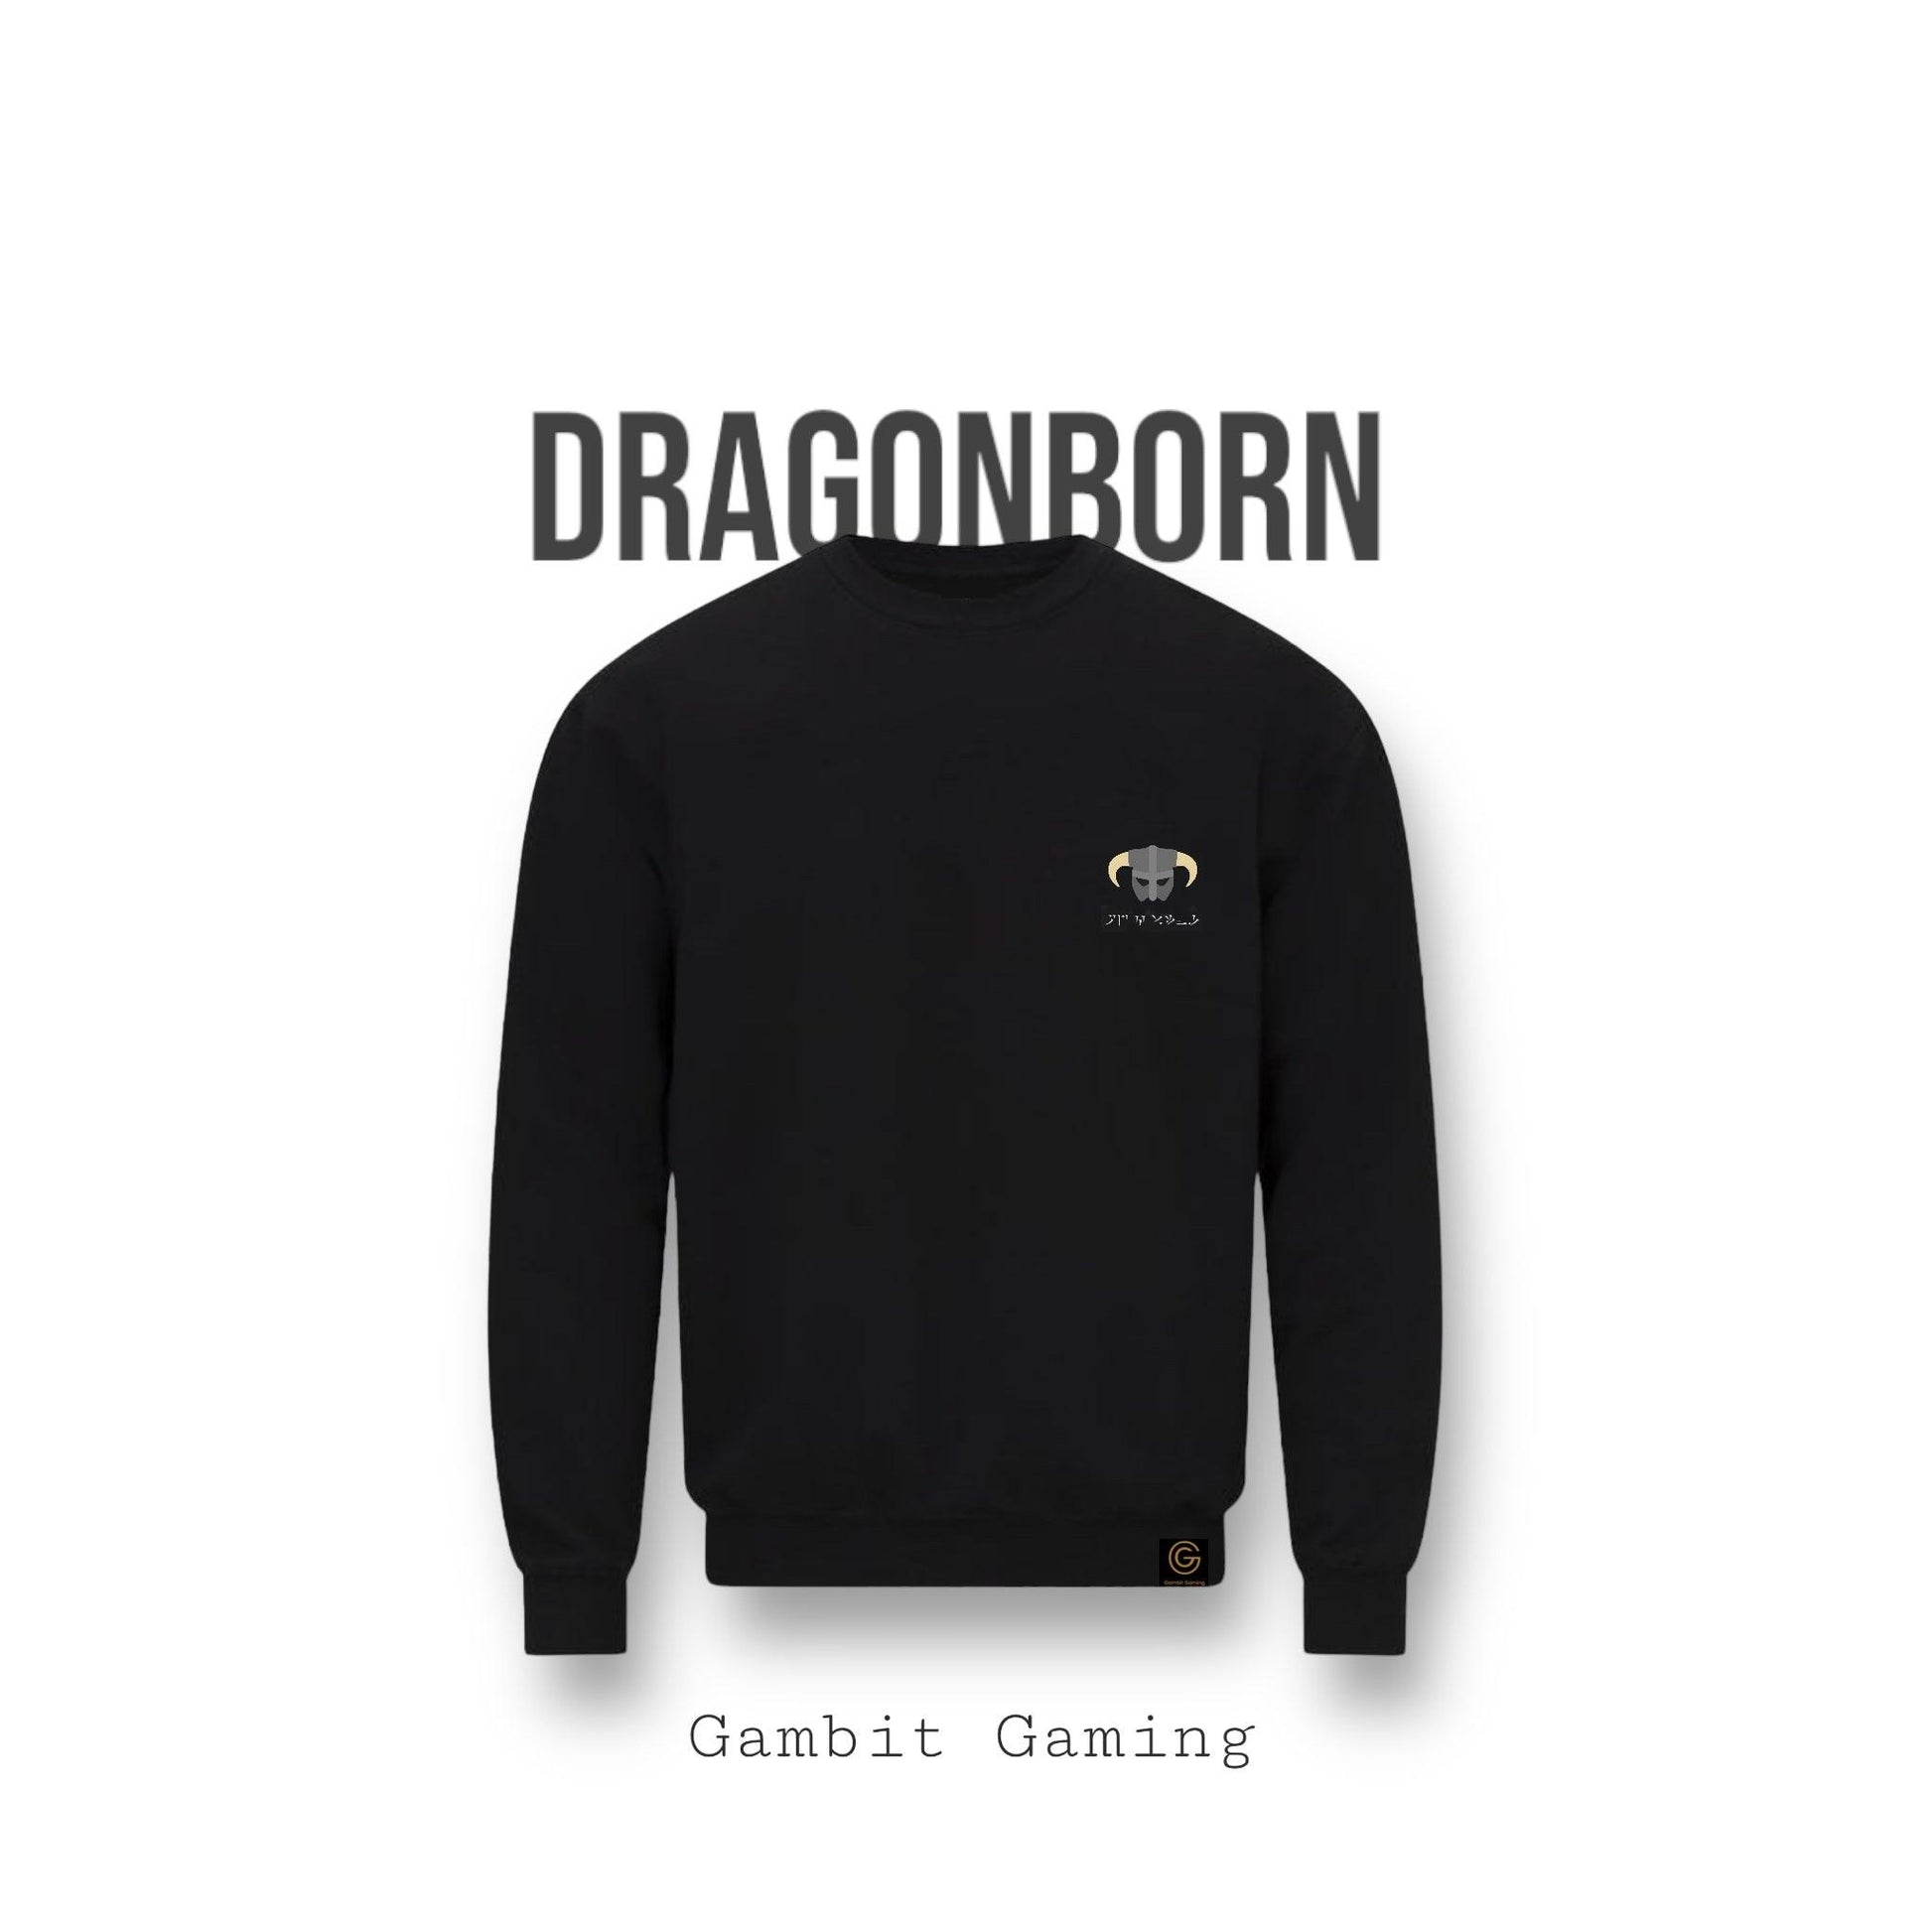 Dragonborn Sweater - Gambit Gaming